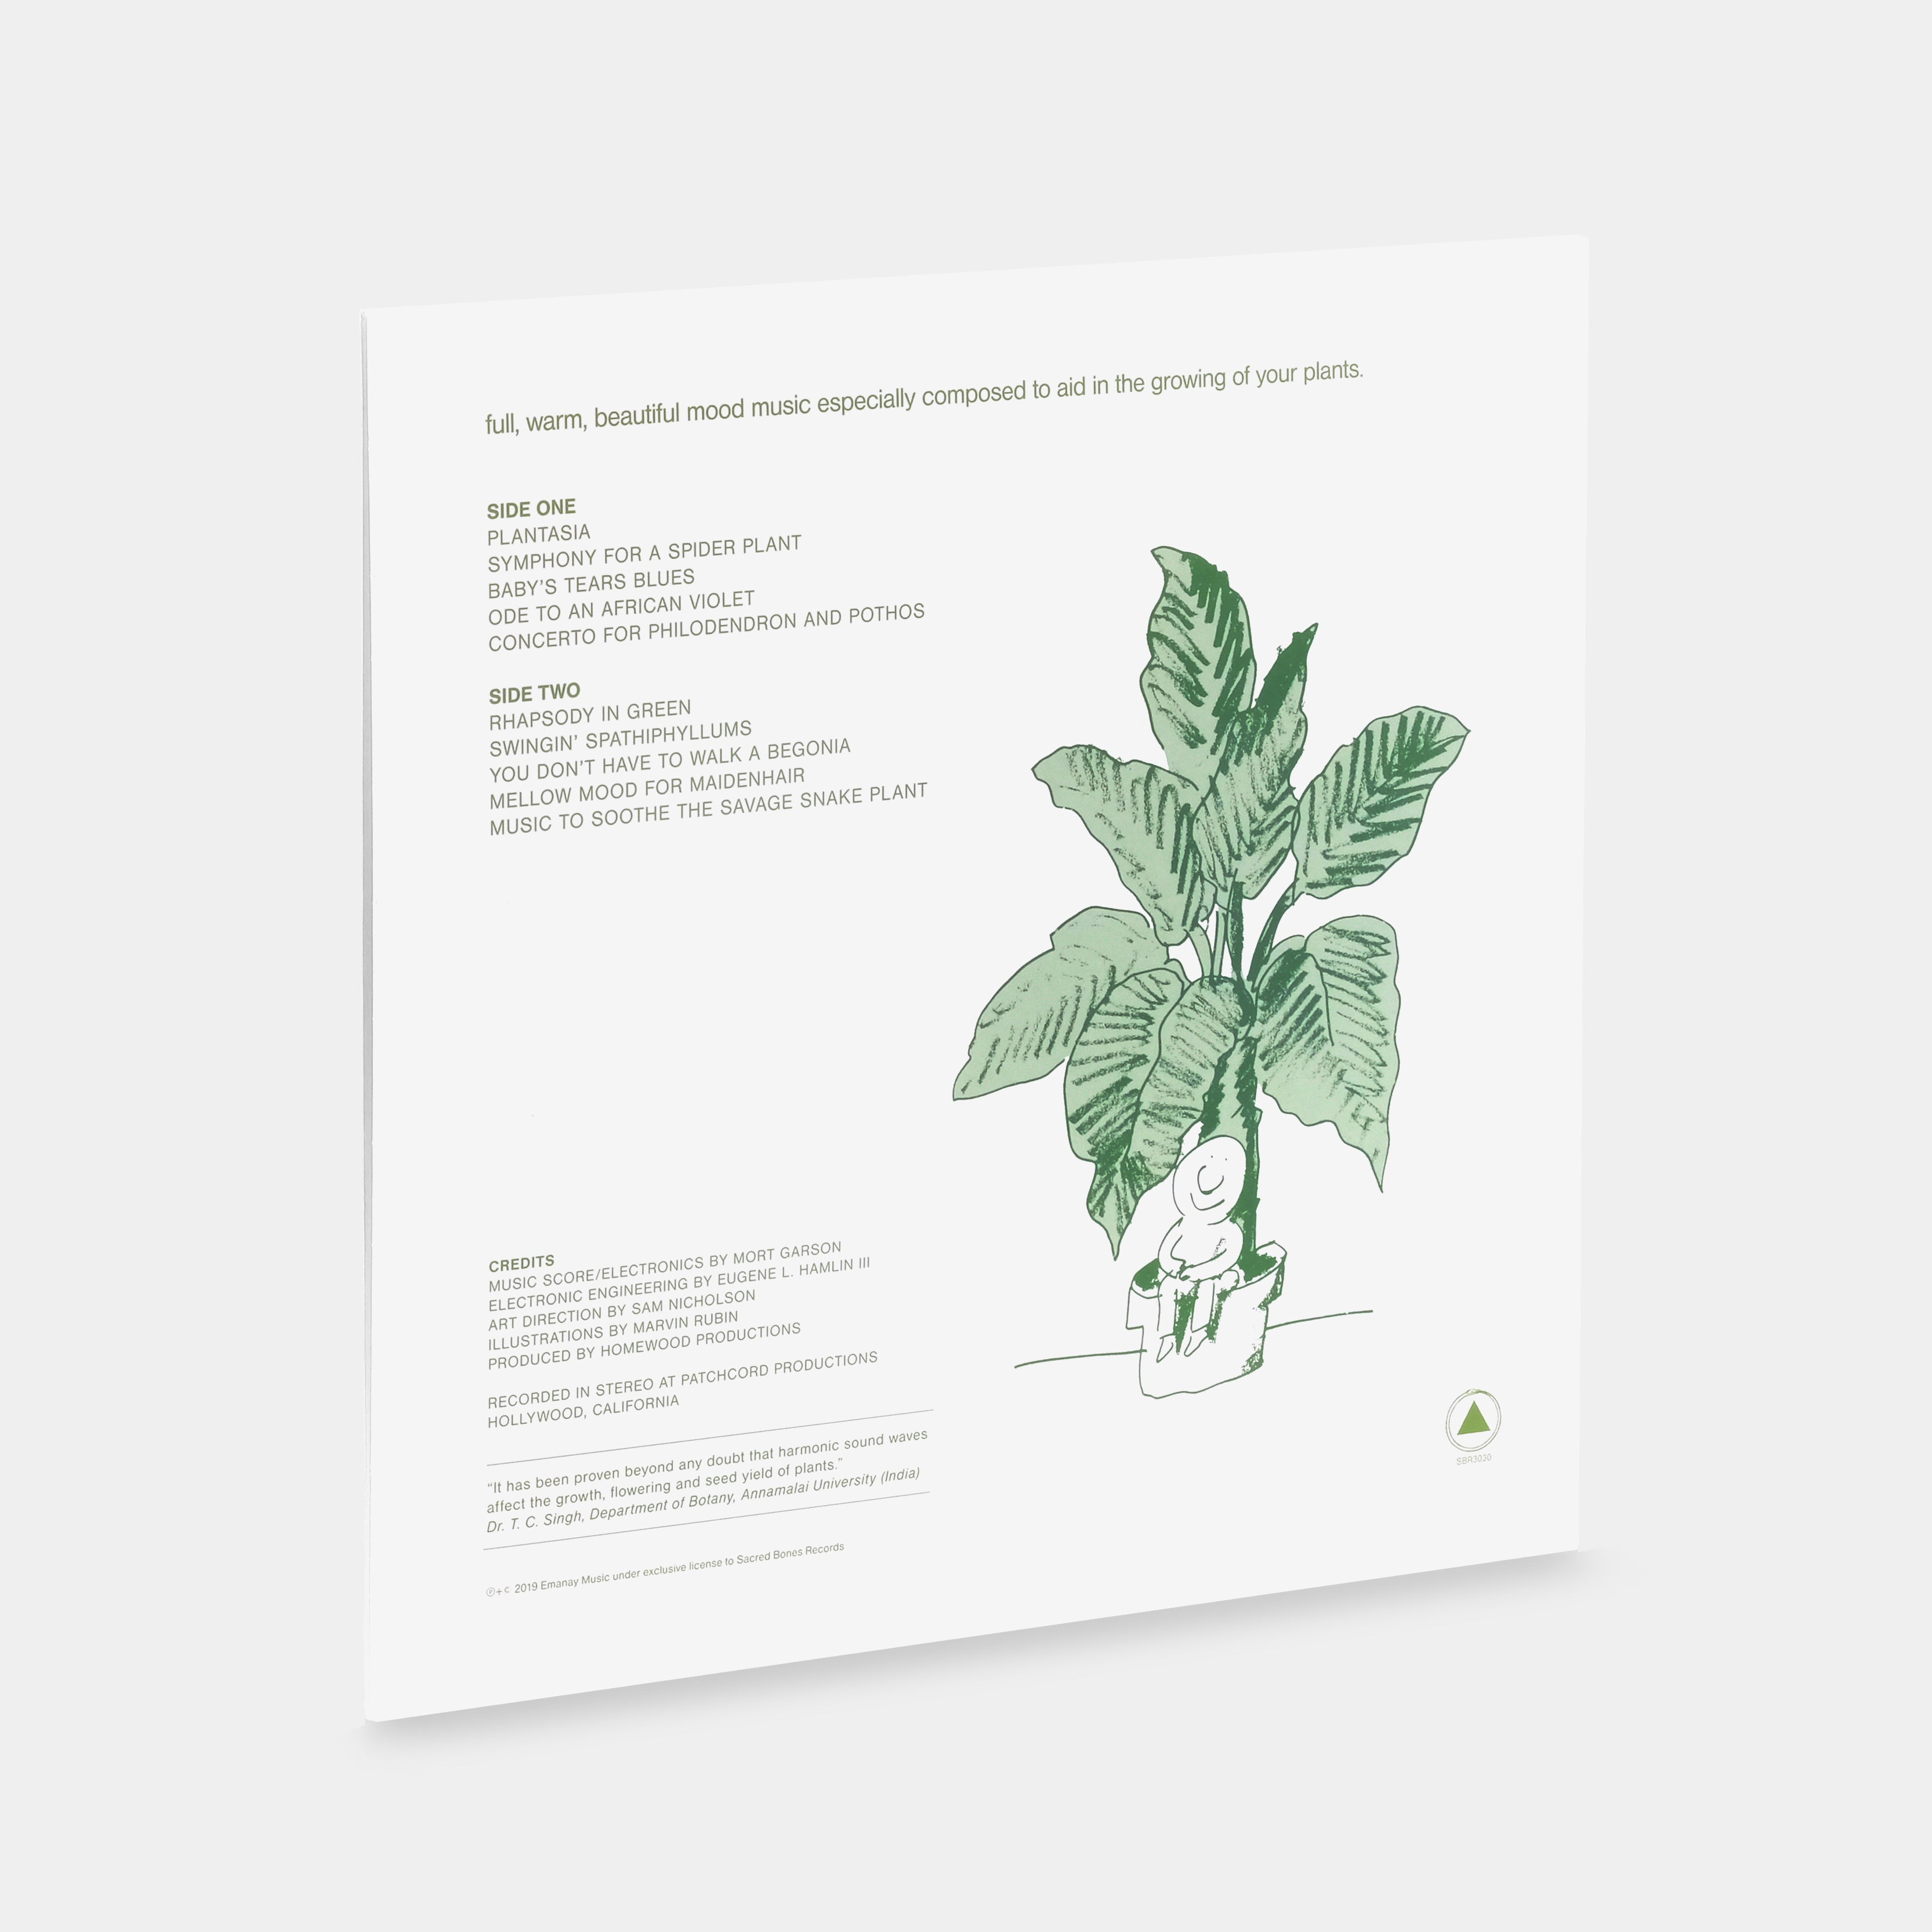 Mort Garson - Mother Earth's Plantasia LP Green Vinyl Record